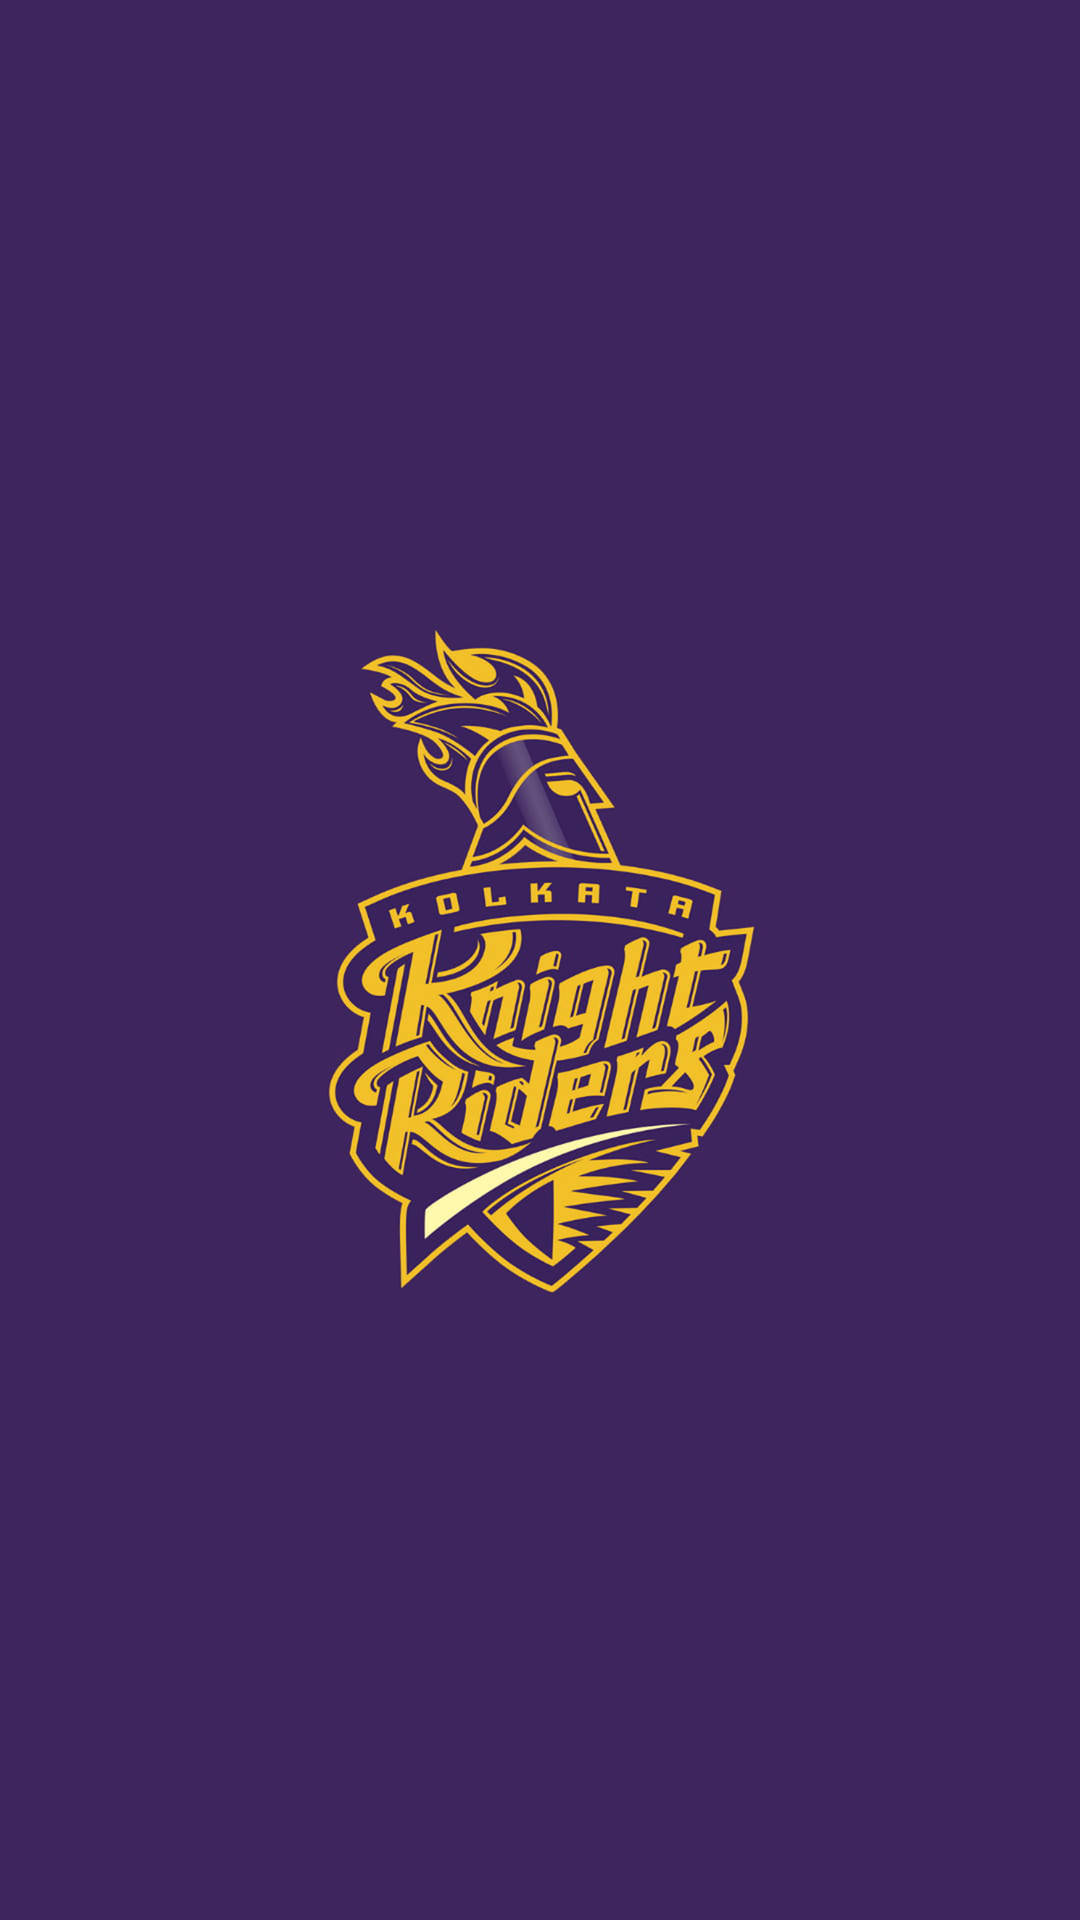 Minimalistisk Kolkata Knight Riders design. Wallpaper